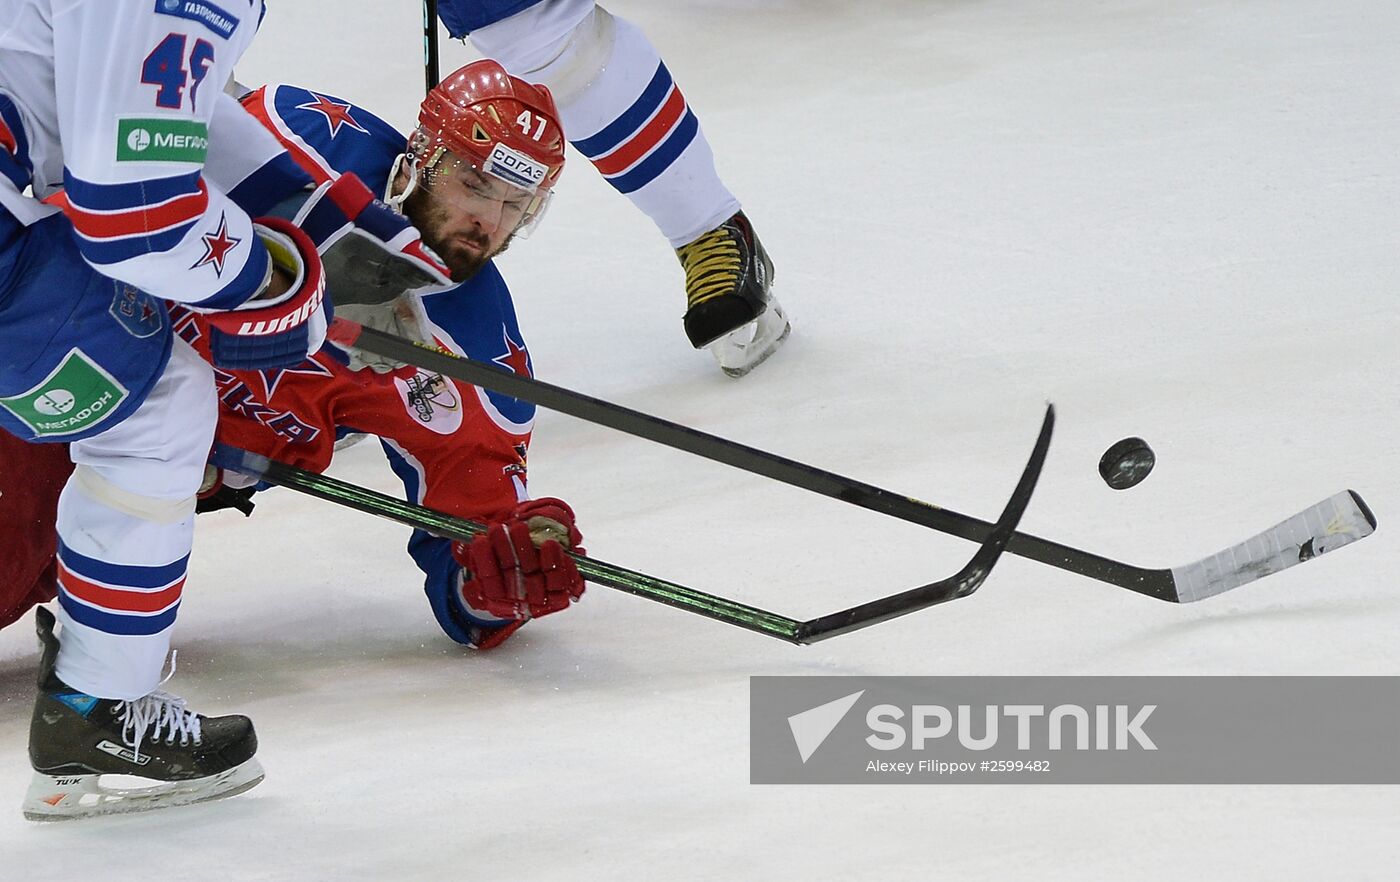 Kontinental Hockey League. CSKA vs. SKA